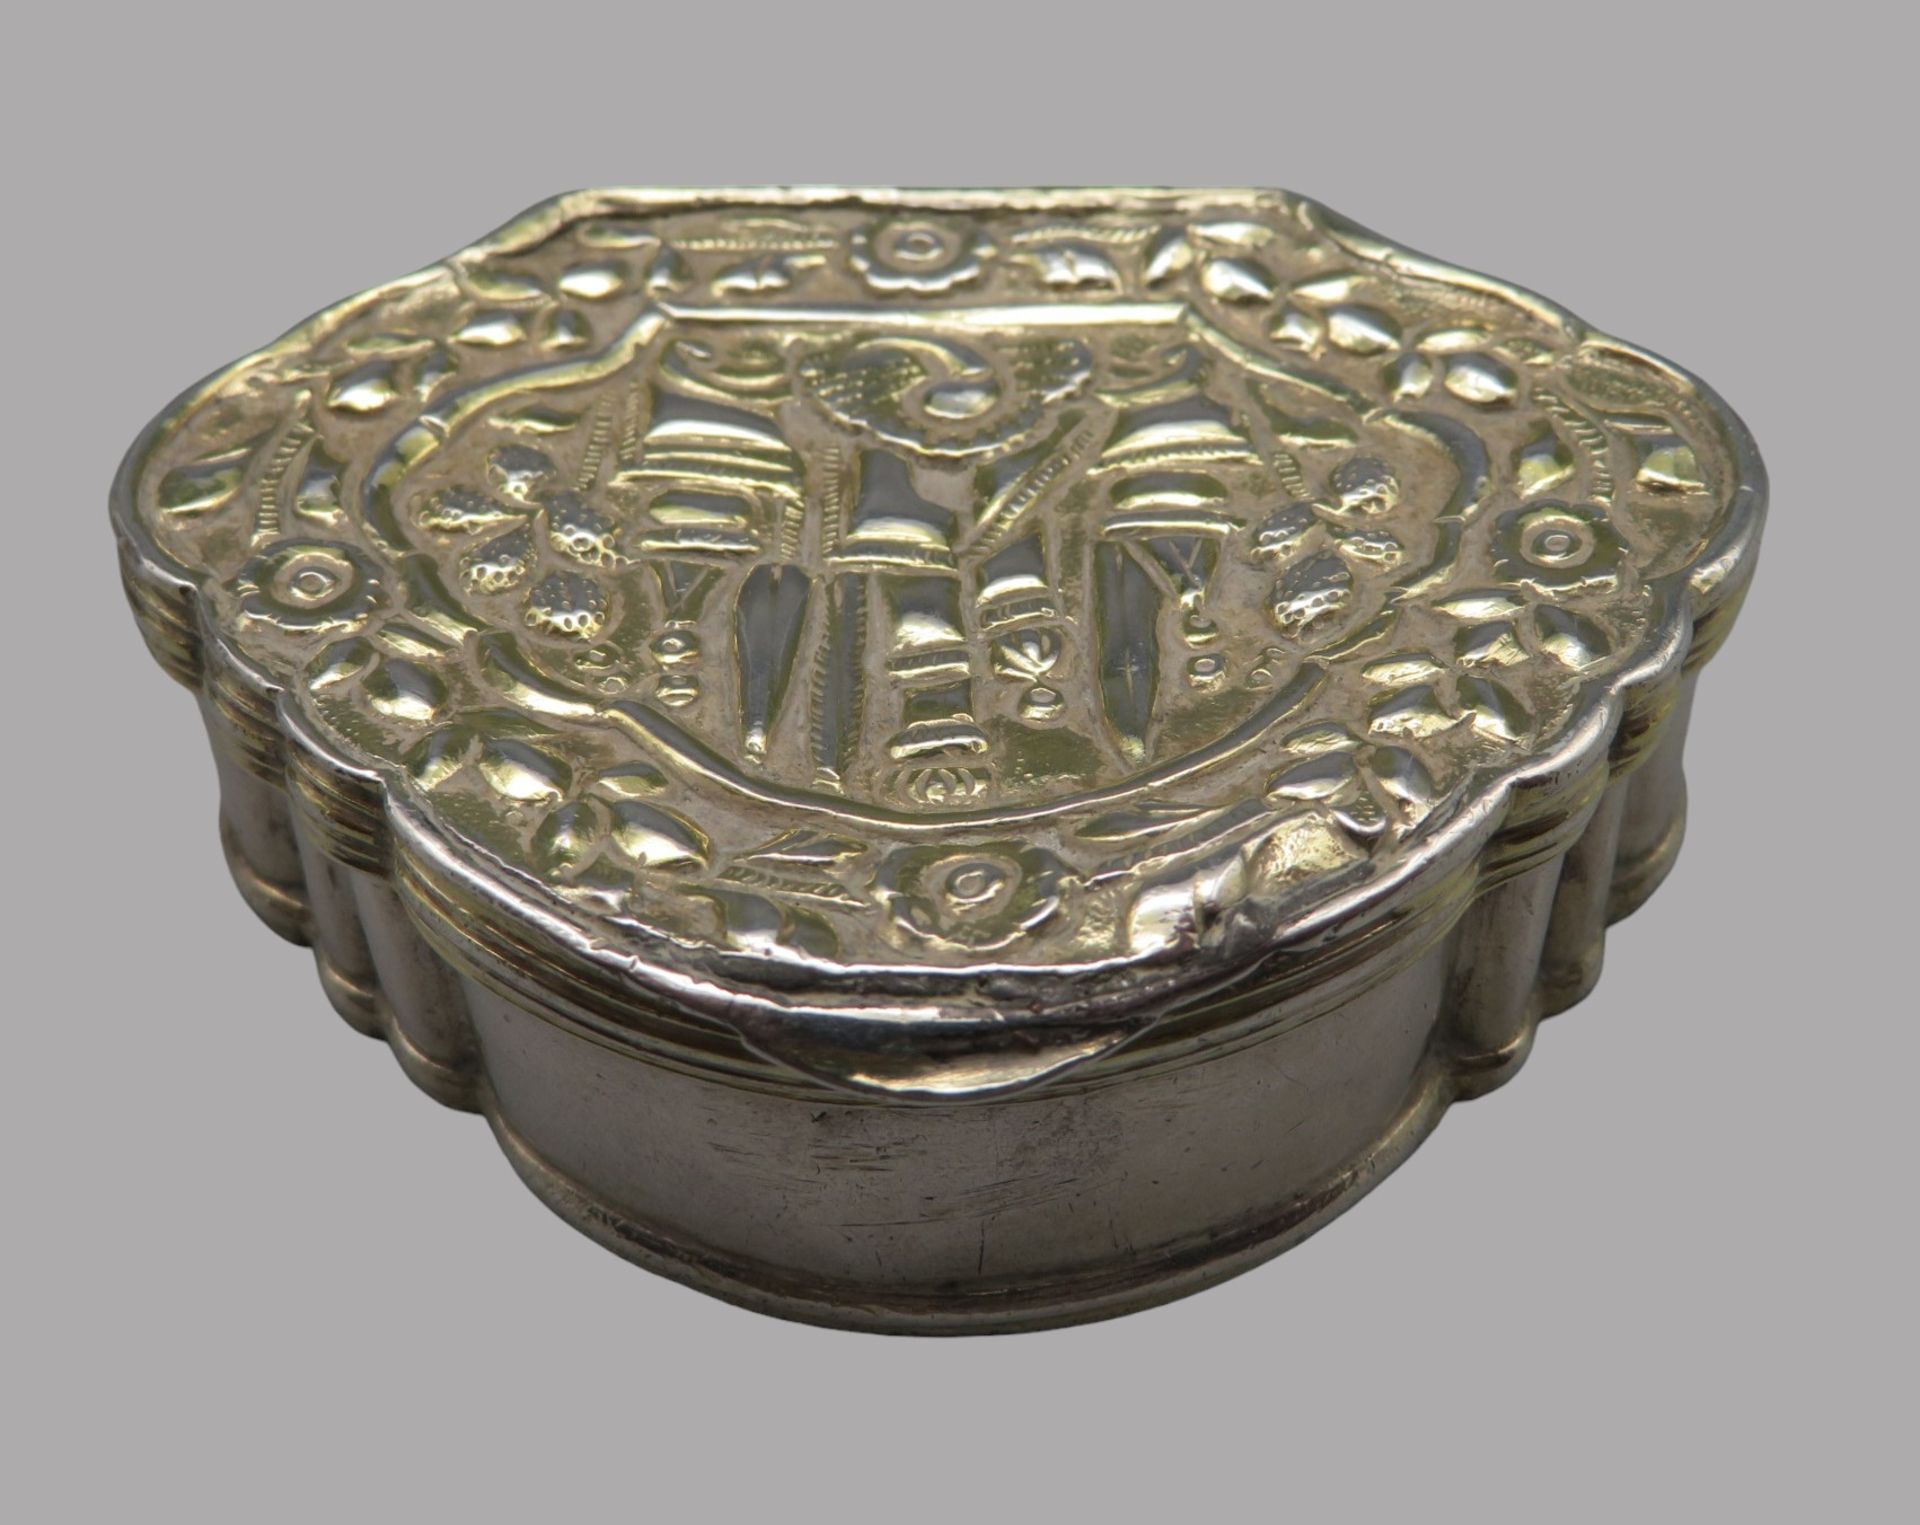 Antike Deckeldose, Skandinavien, 17/18. Jahrhundert, Silber, geprüft, Deckel reich verziert, 48,7 g